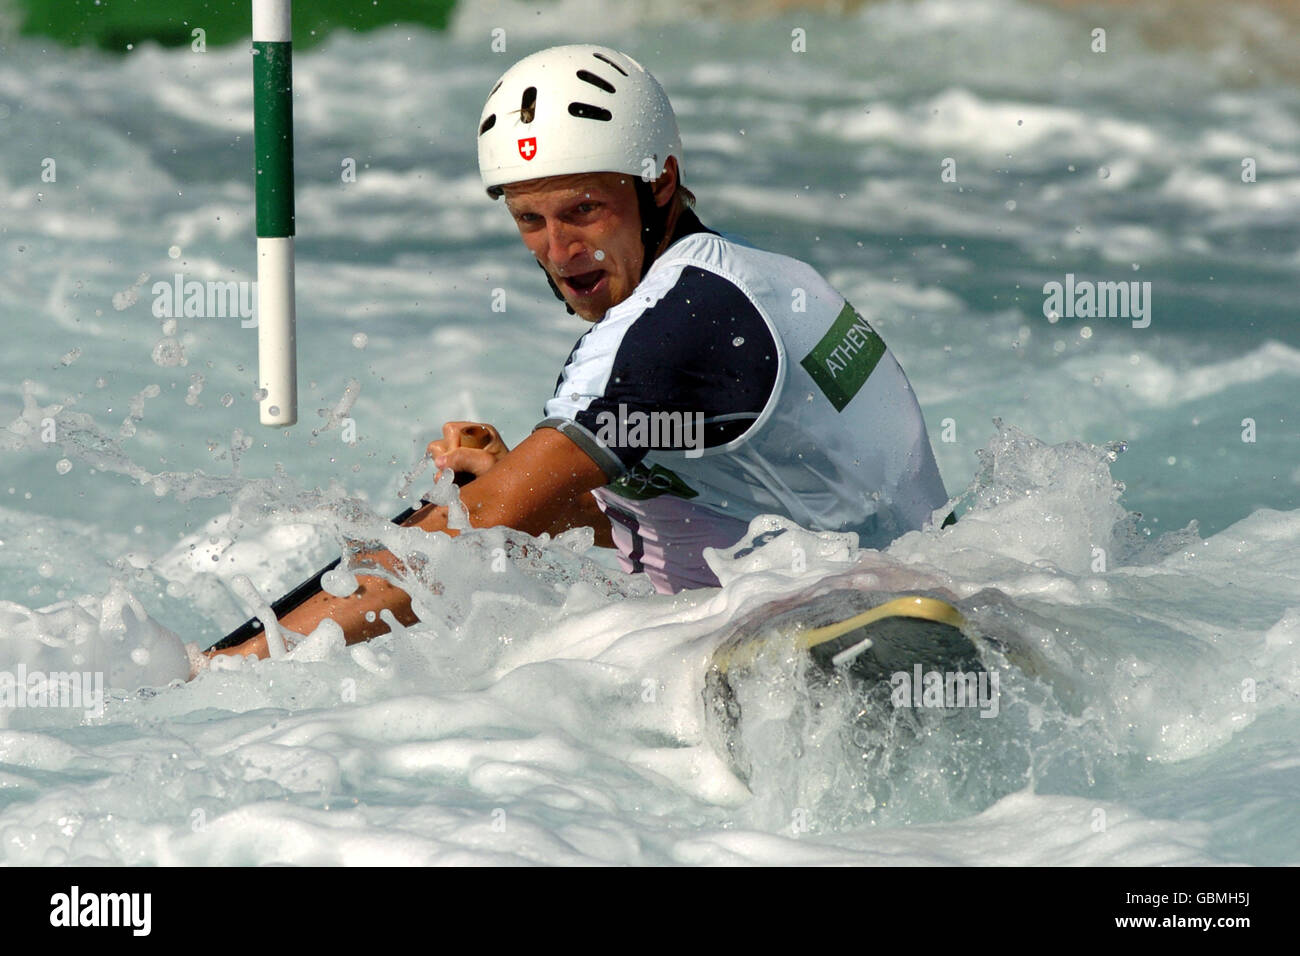 Canoeing - Athens Olympic Games 2004 - Men's C1 Canoe Single. Switzerland's Ronnie Duerrenmatt in action Stock Photo